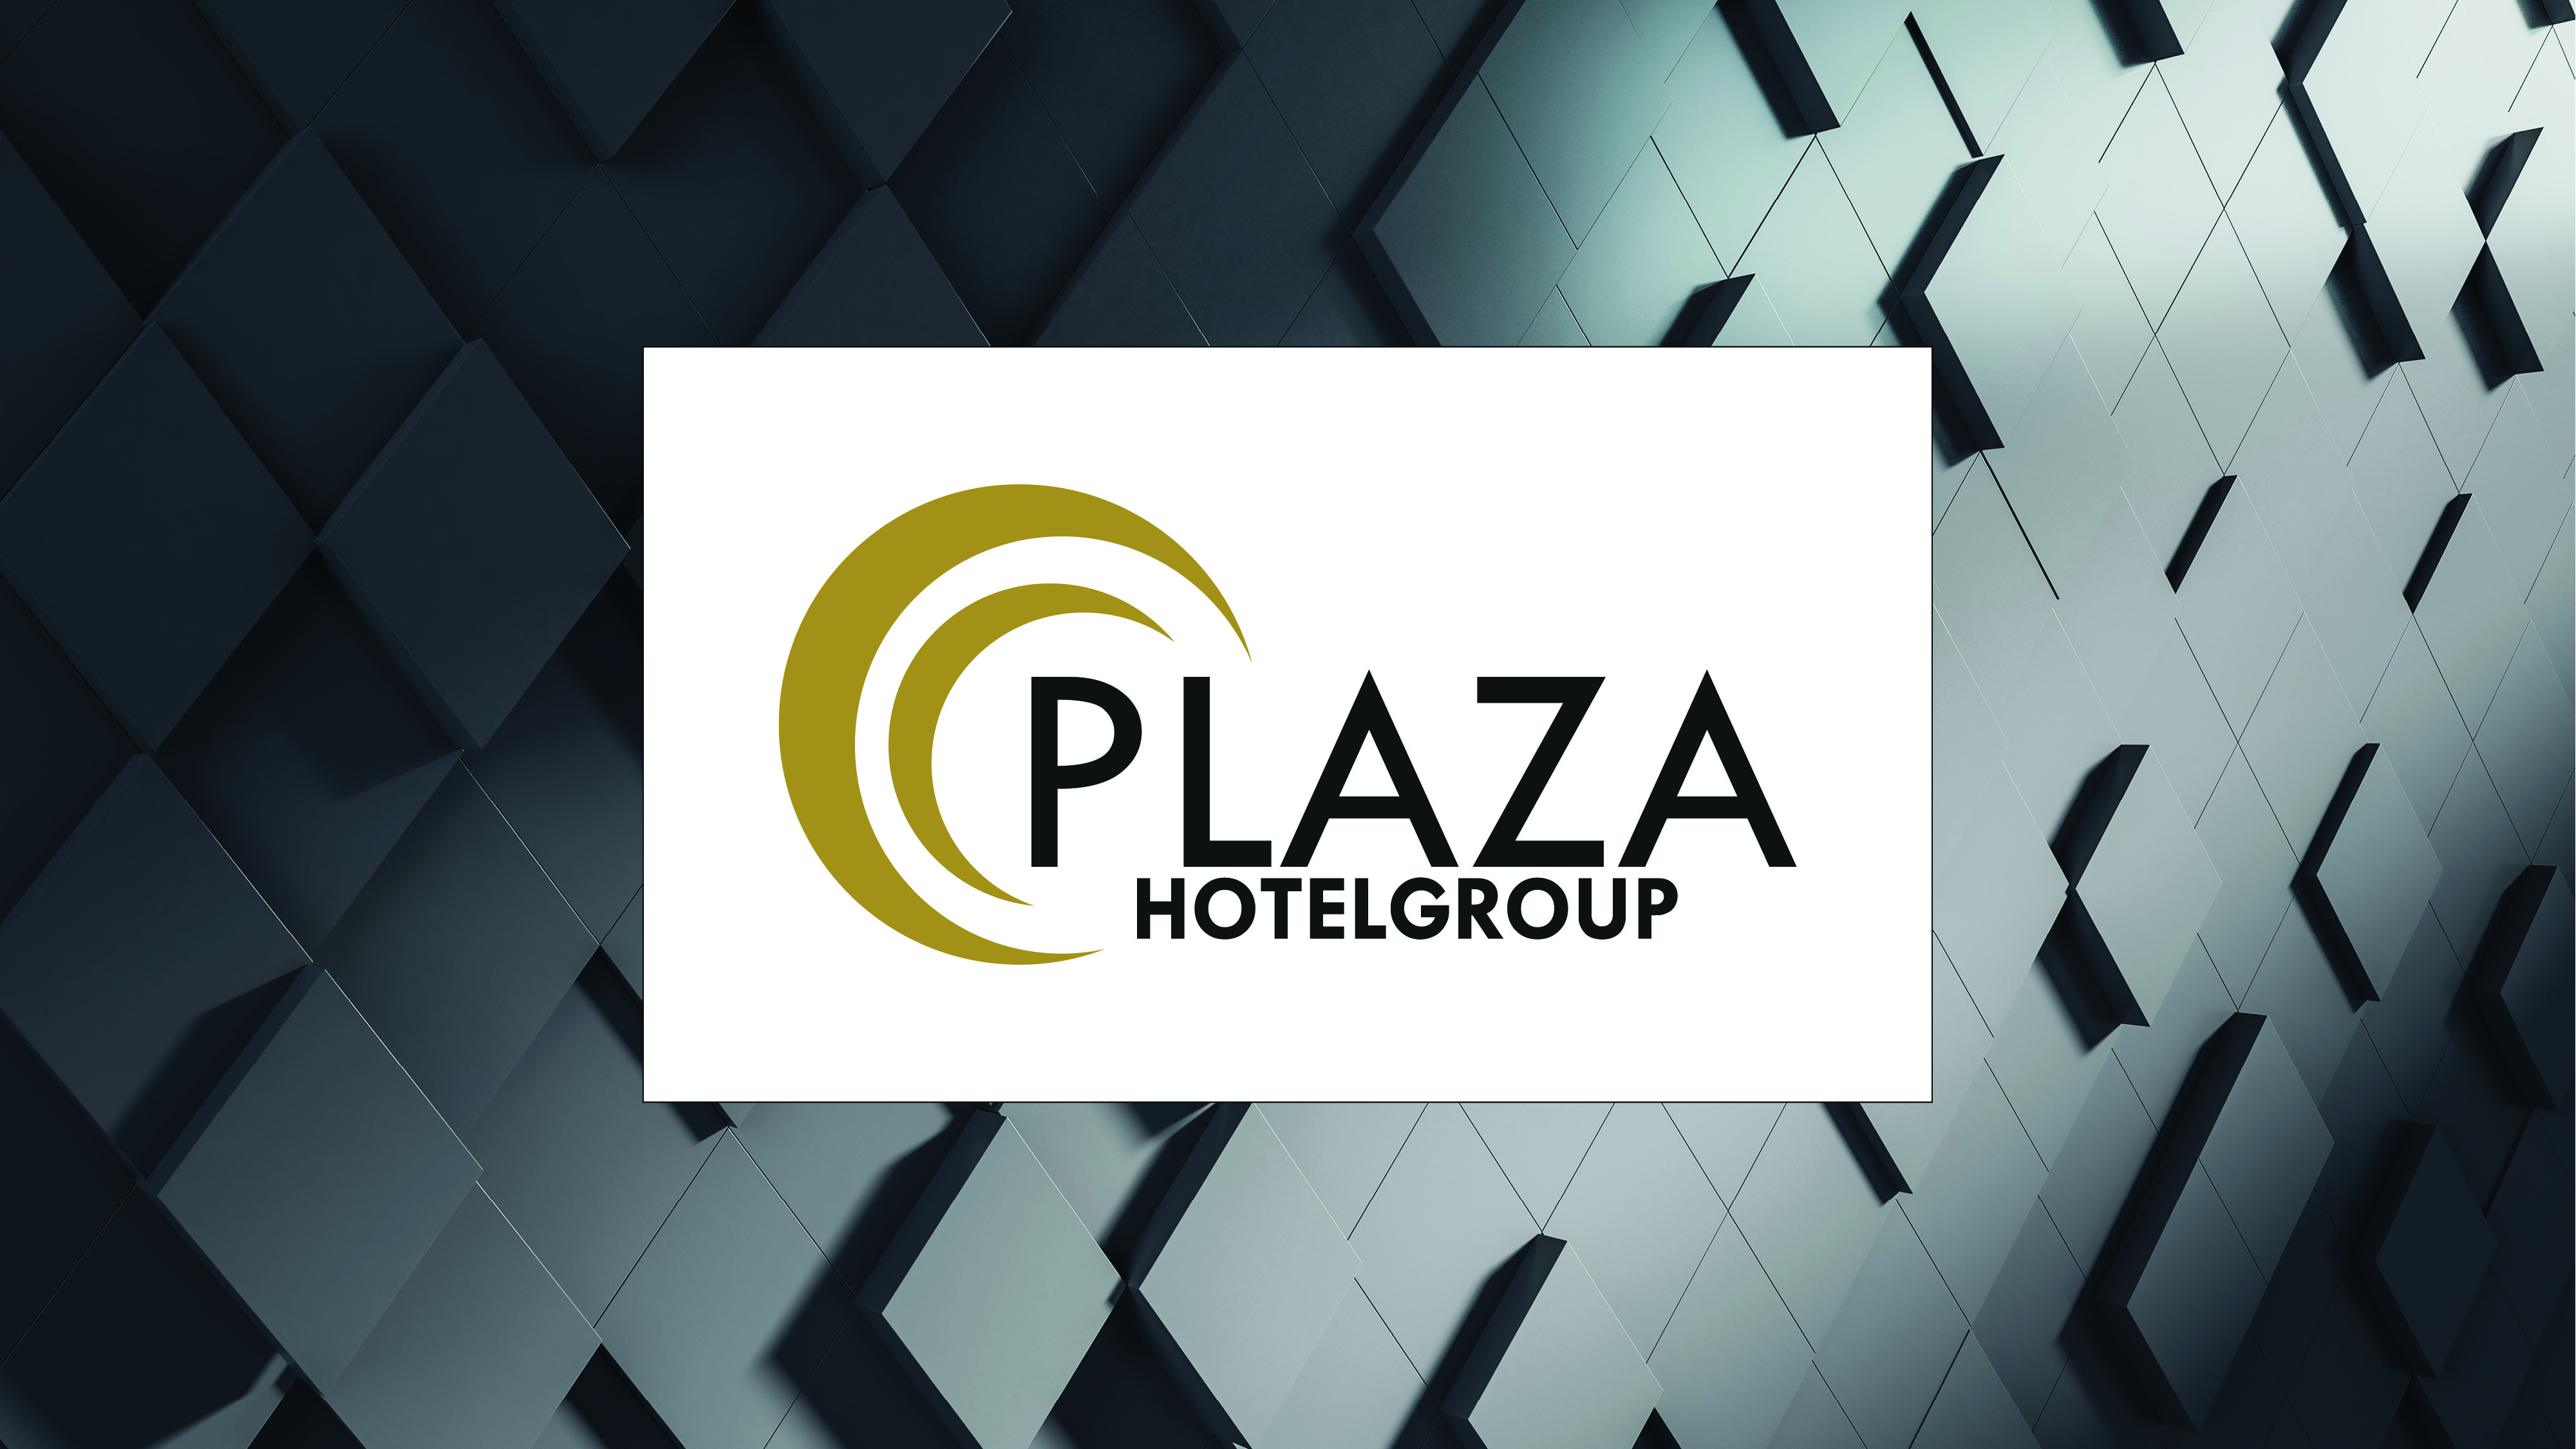 Plaza Hotel Group